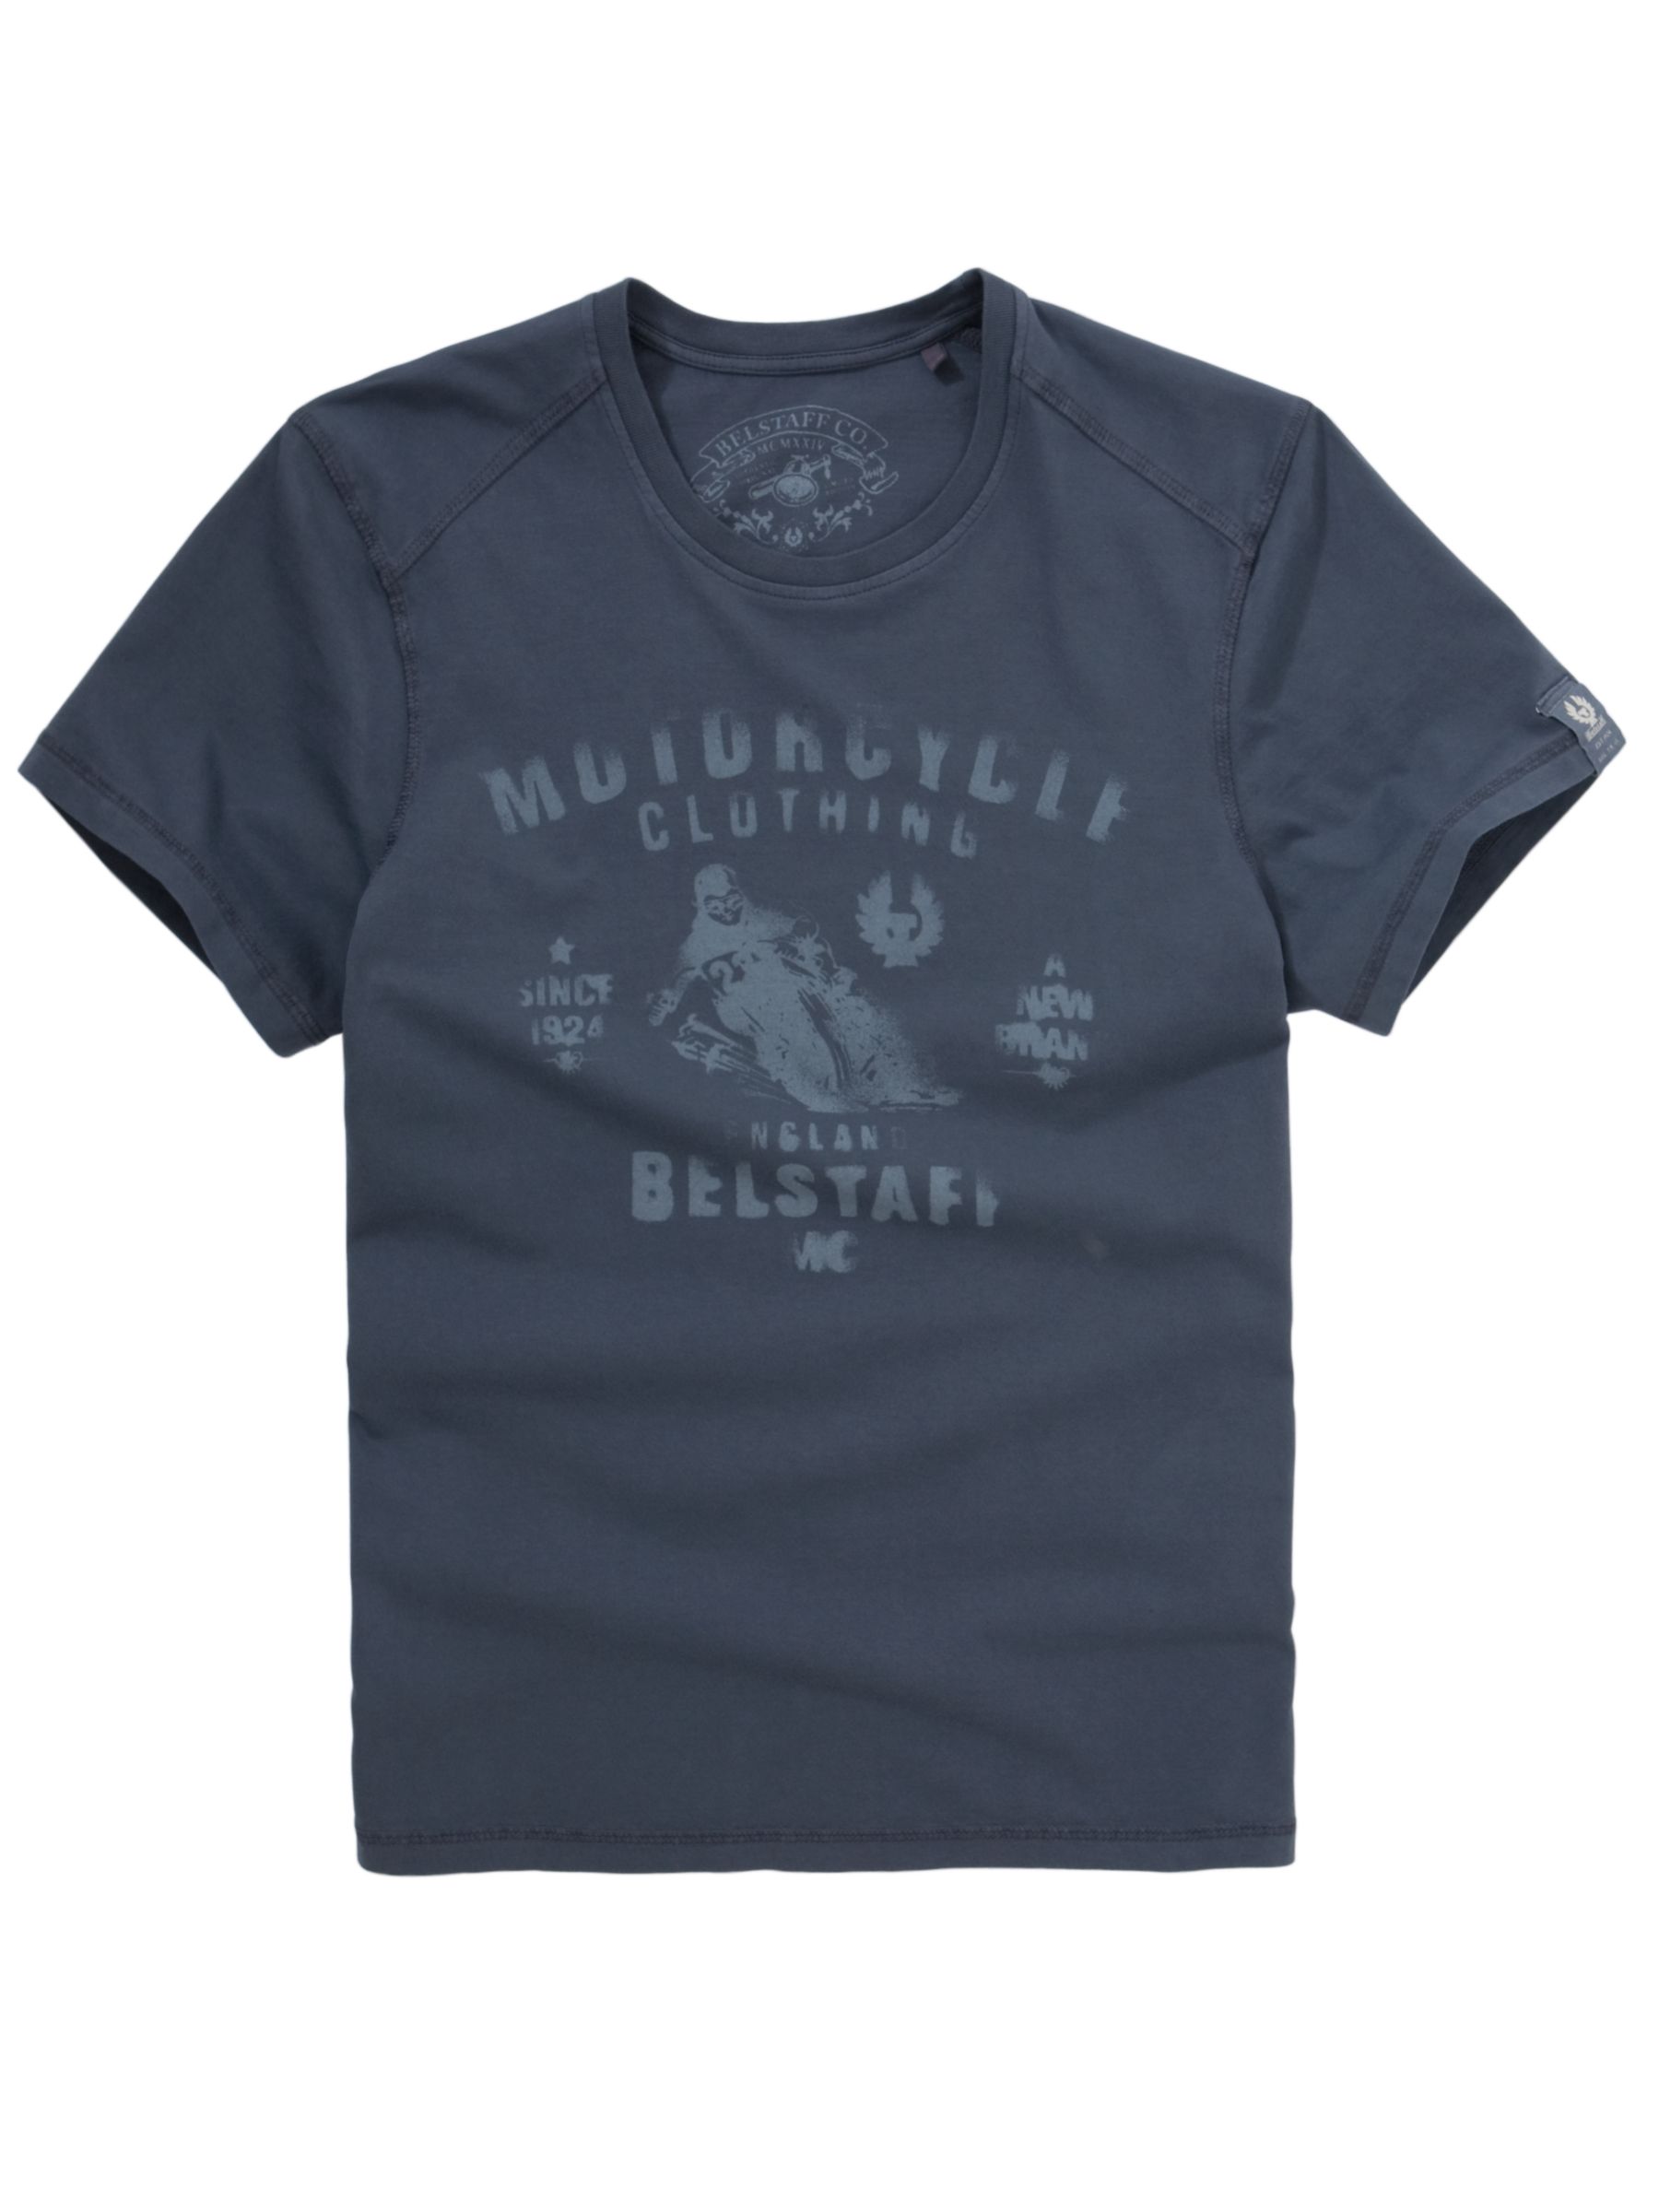 Belstaff Vintage Speed T-Shirt, Navy blue